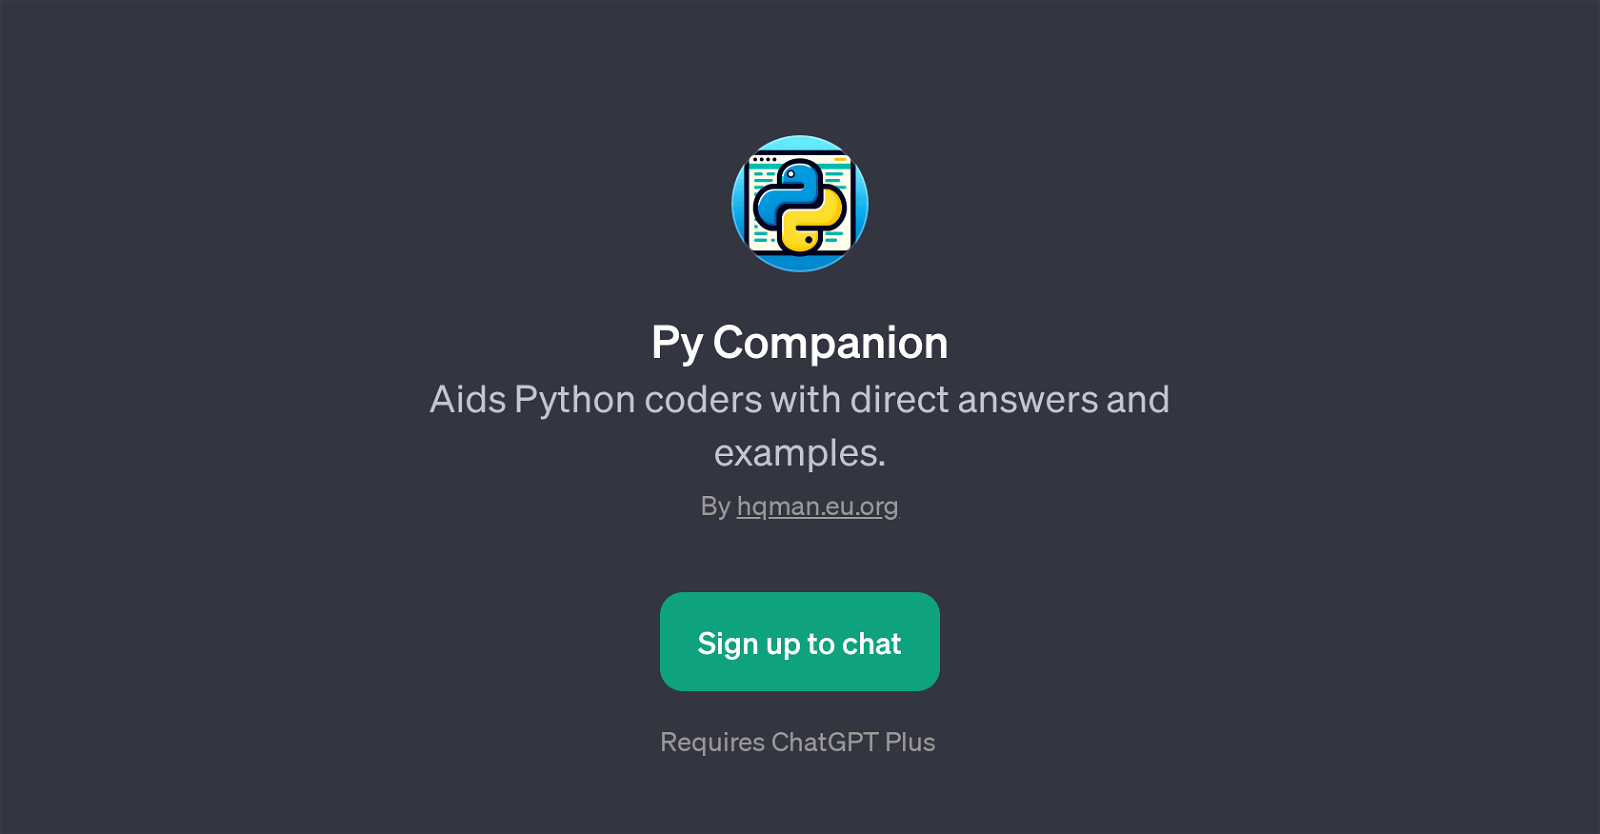 Py Companion website